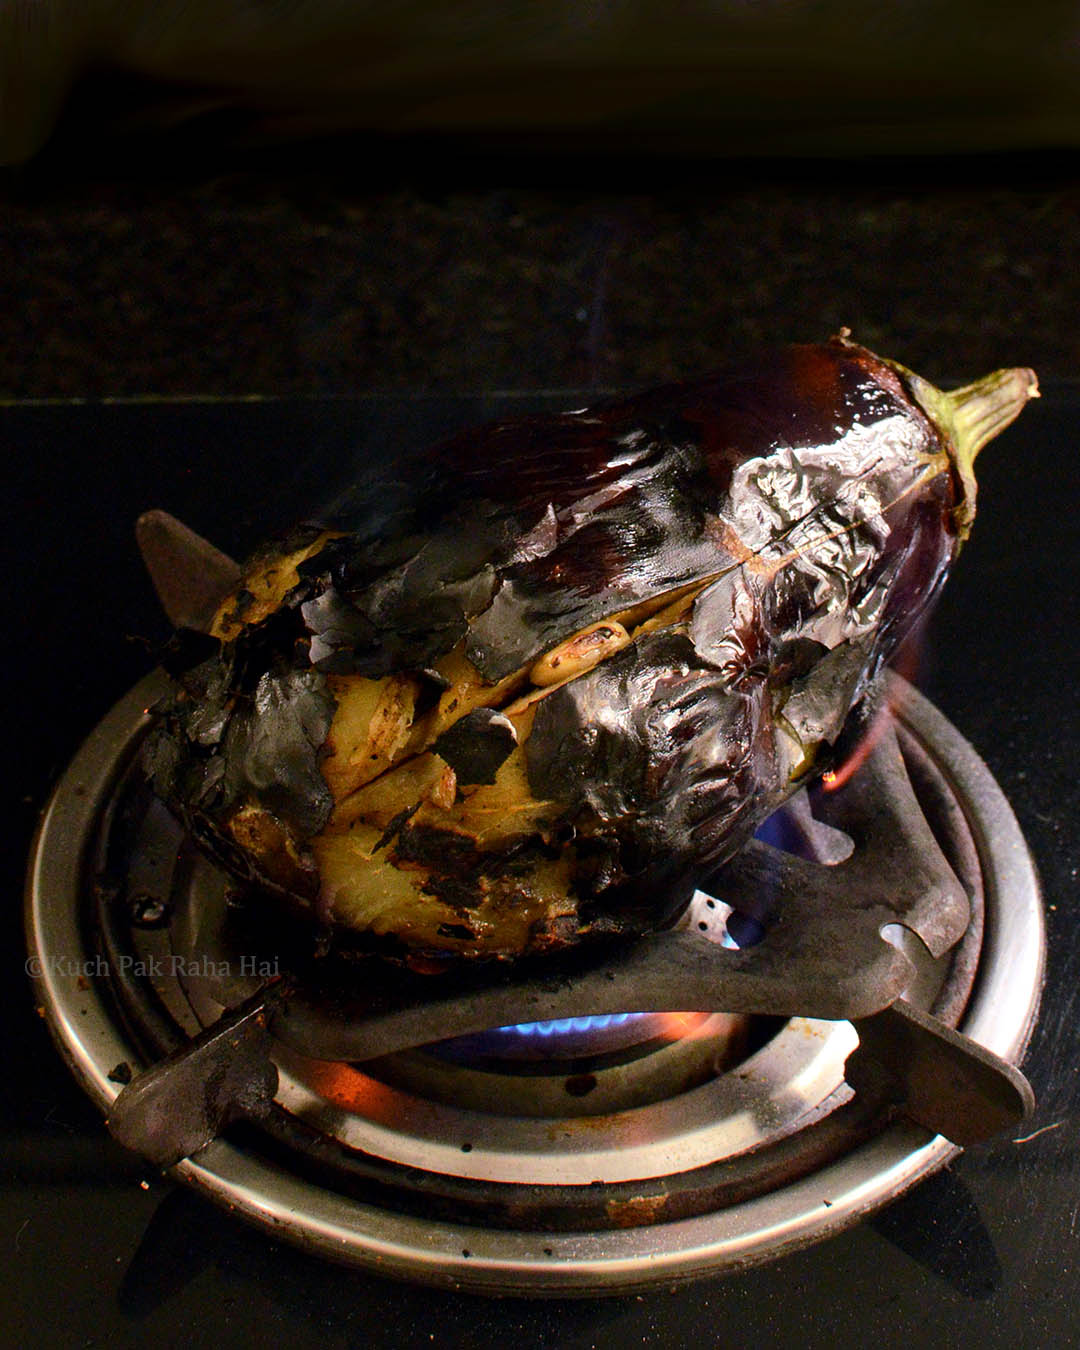 Eggplant (baingan) being roasted on fire.